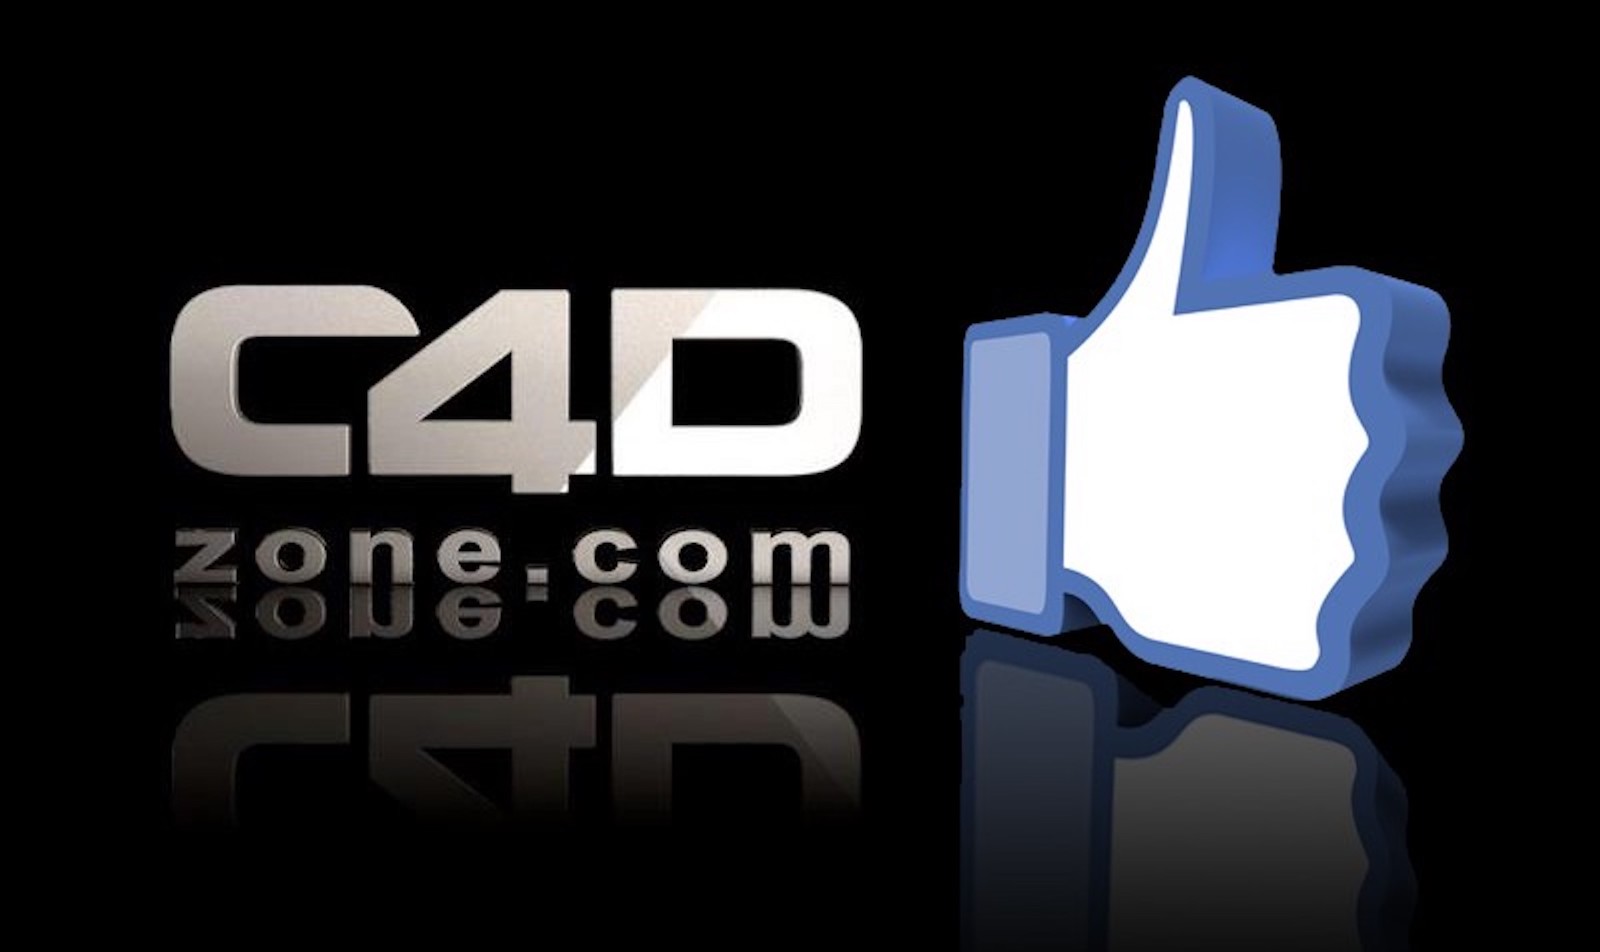 C4Dzone goes to FaceBook